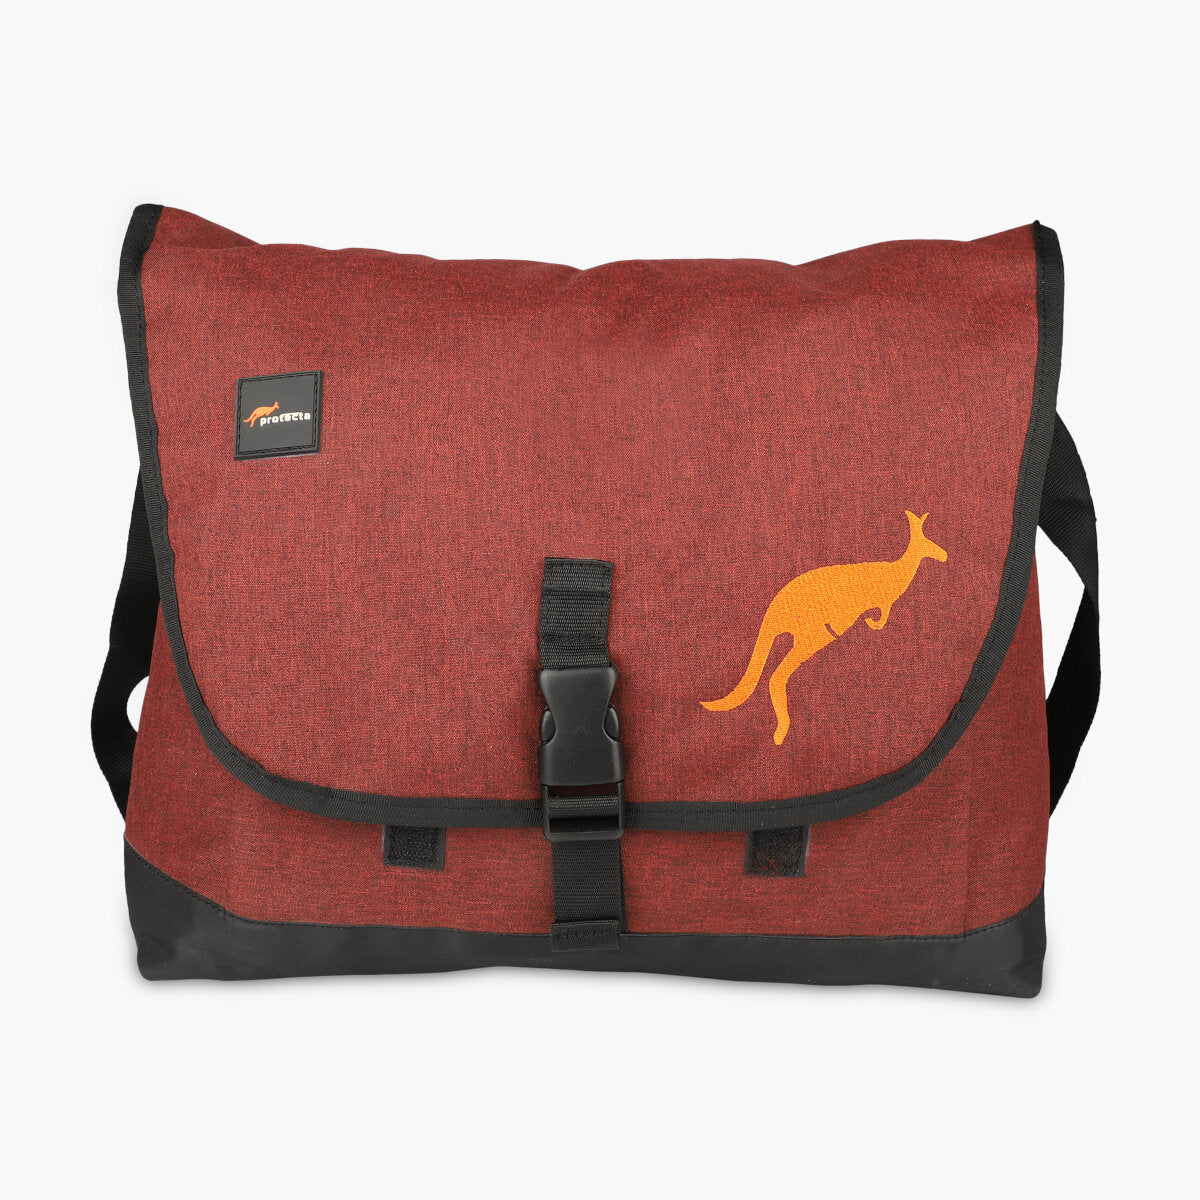 Rust Red, Protecta Leap Laptop Office Messenger Bag-Main